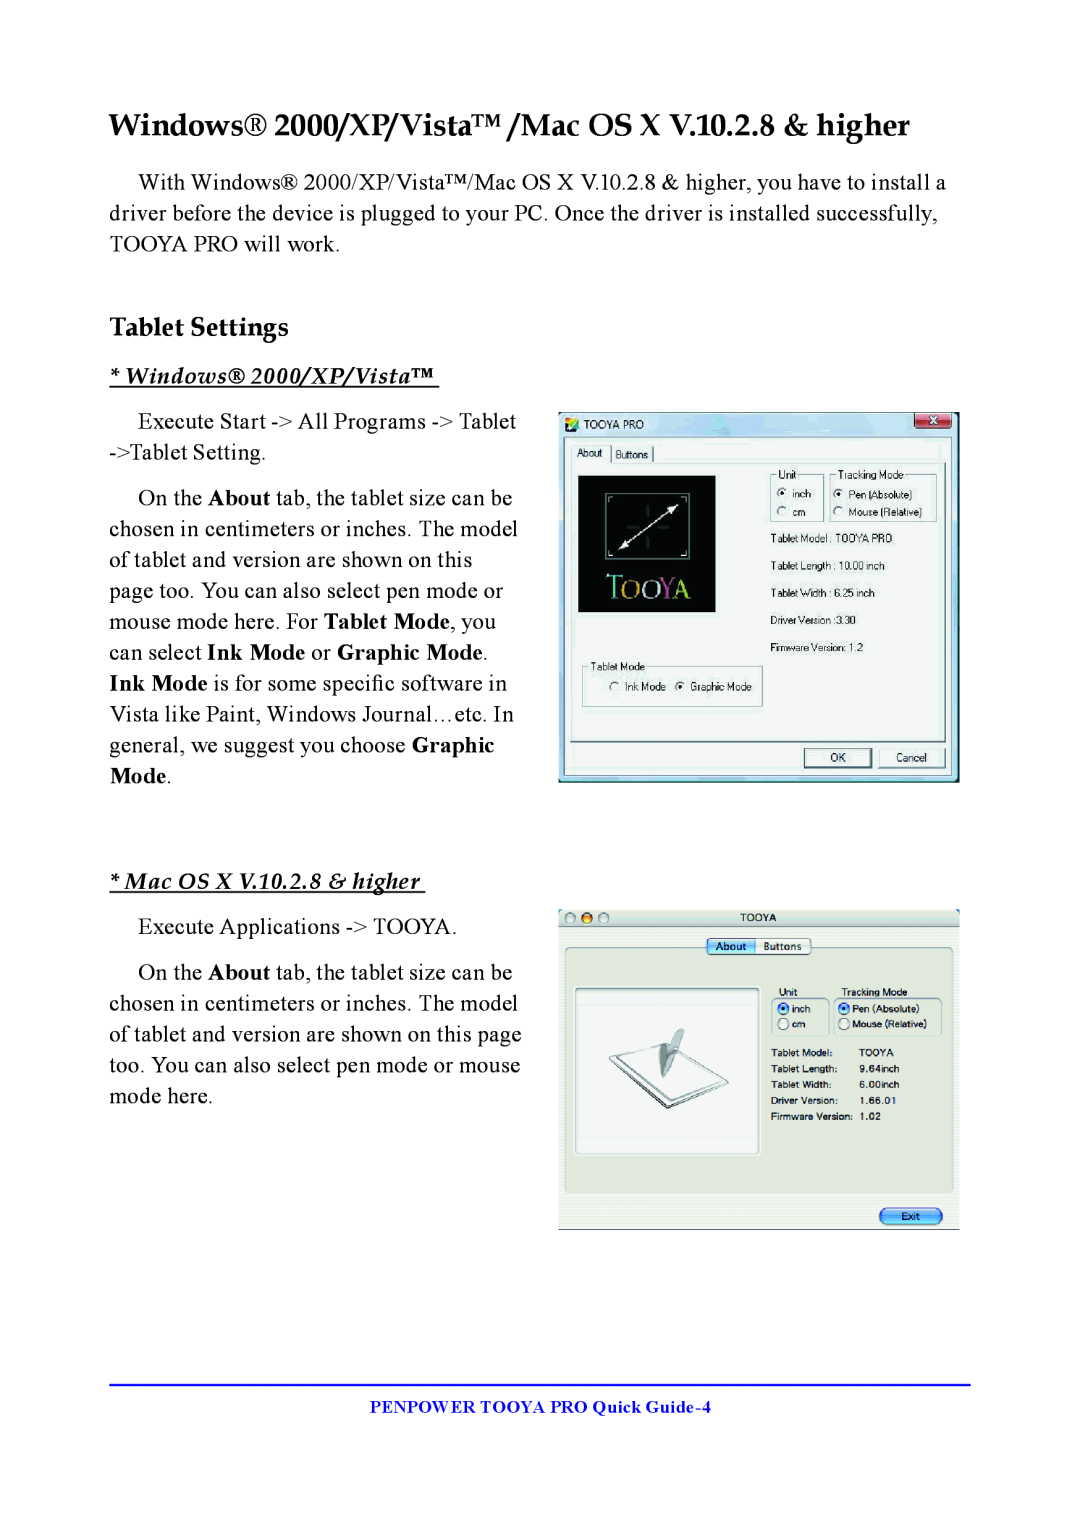 Penpower TOOYA PRO manual Windows 2000/XP/Vista /Mac OS X V.10.2.8 & higher, Tablet Settings 